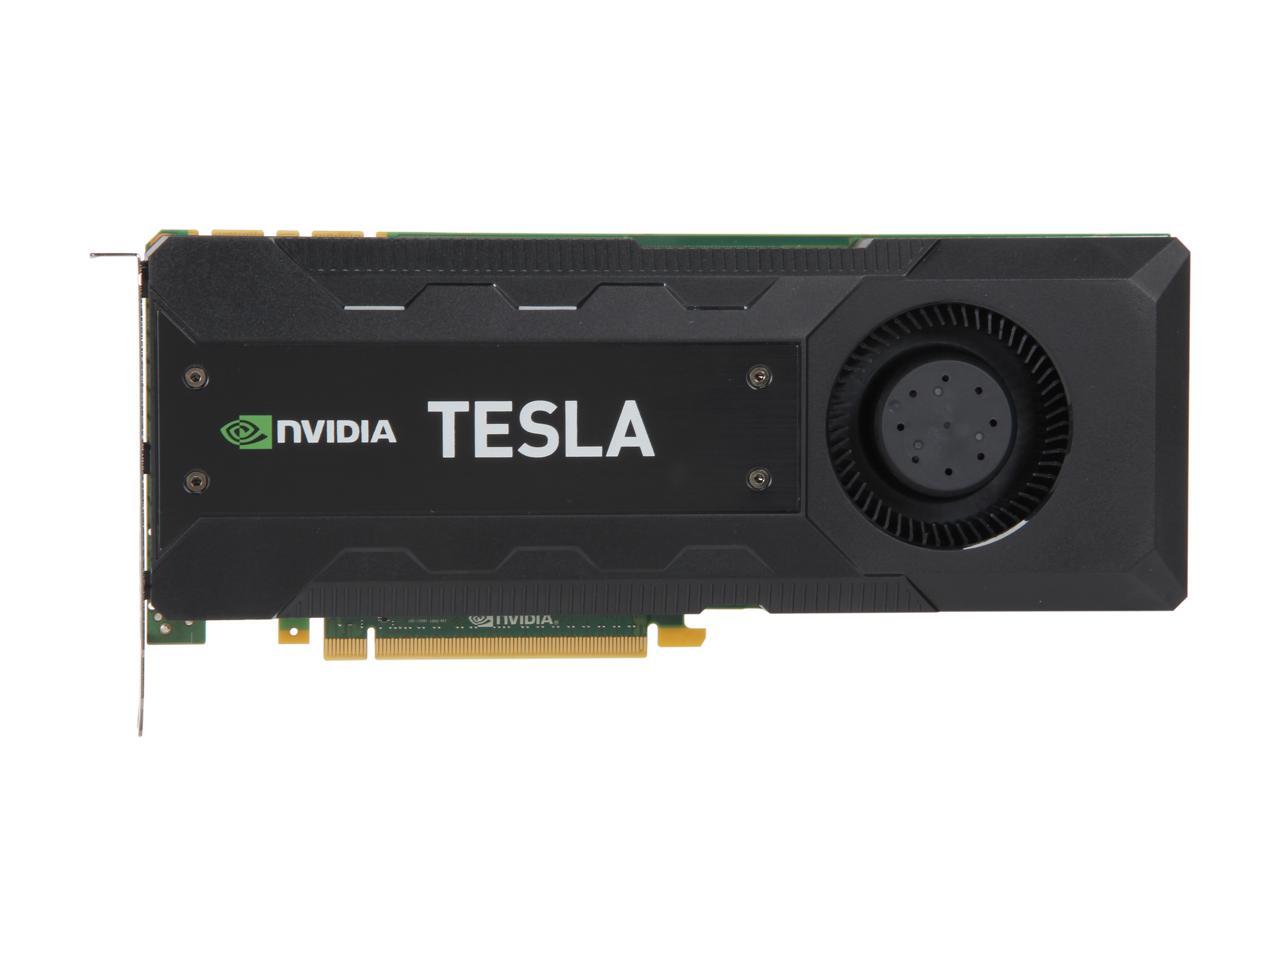 Nvidia Tesla K20 (900-22081-2220-000) Gk110 5Gb 320-Bit Gddr5 Pci Express 2.0 X16 3.52 Tflops Workstation Video Card